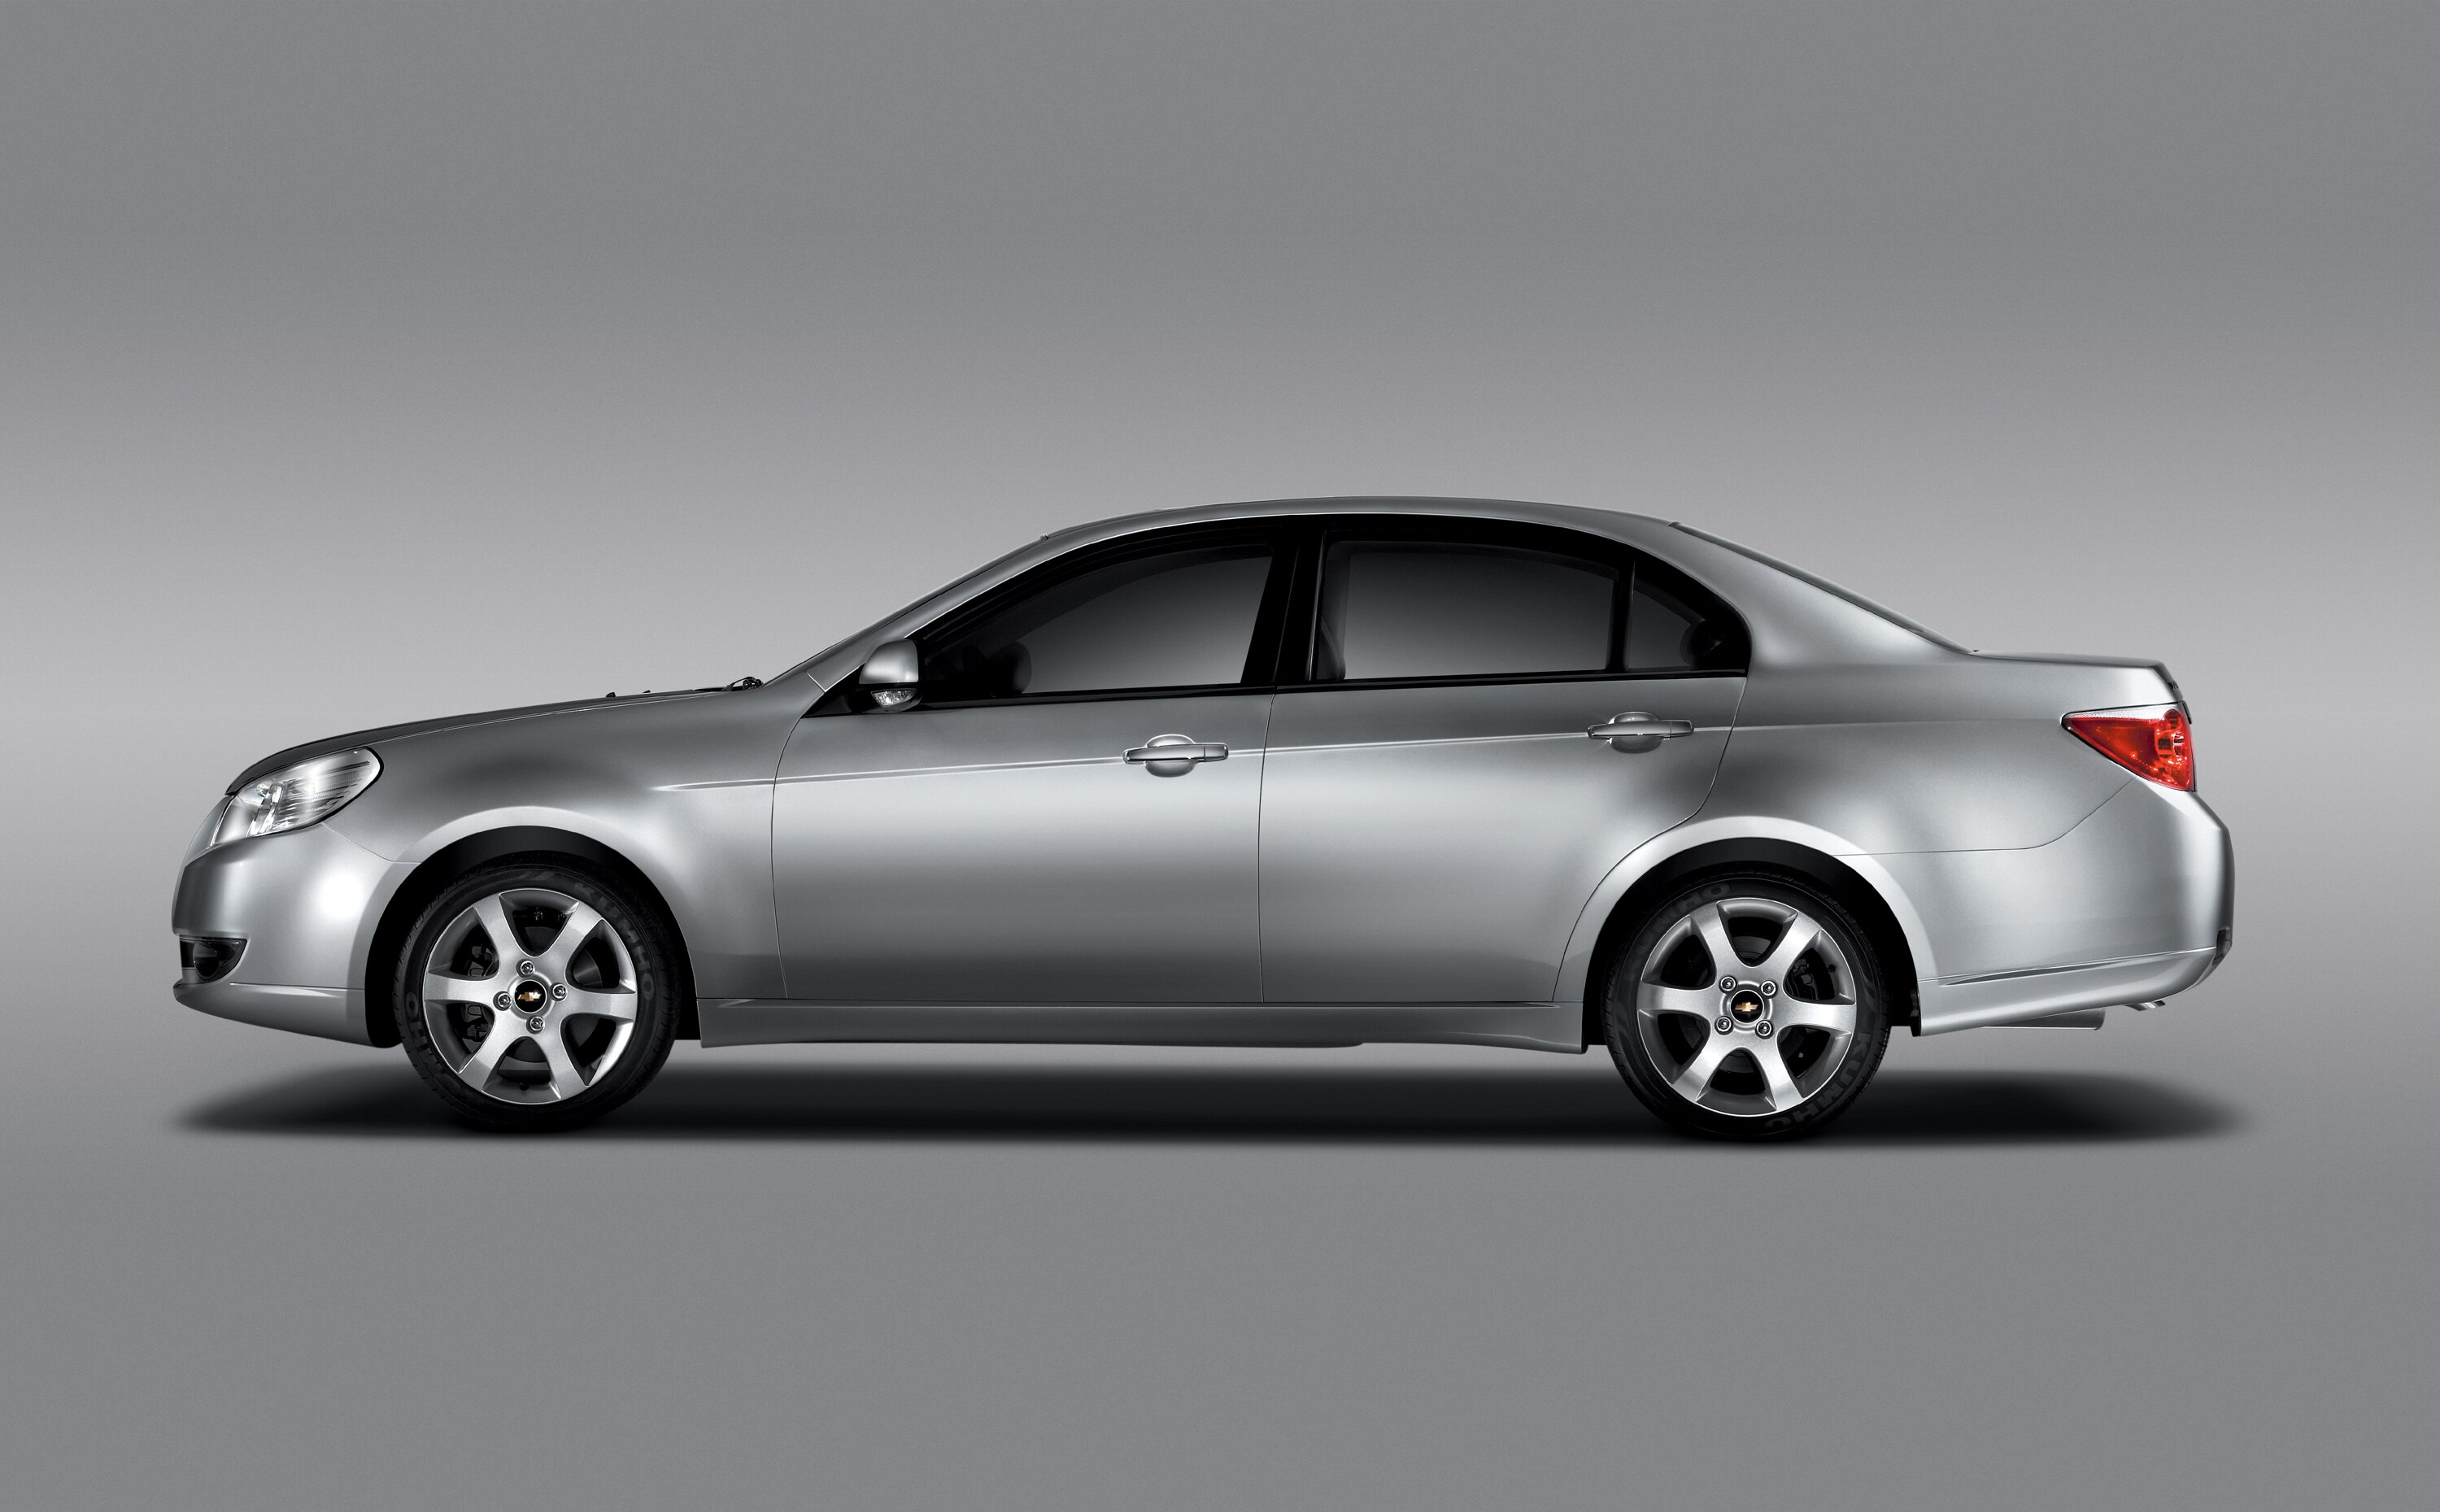 Chevrolet Epica exterior - Side Profile